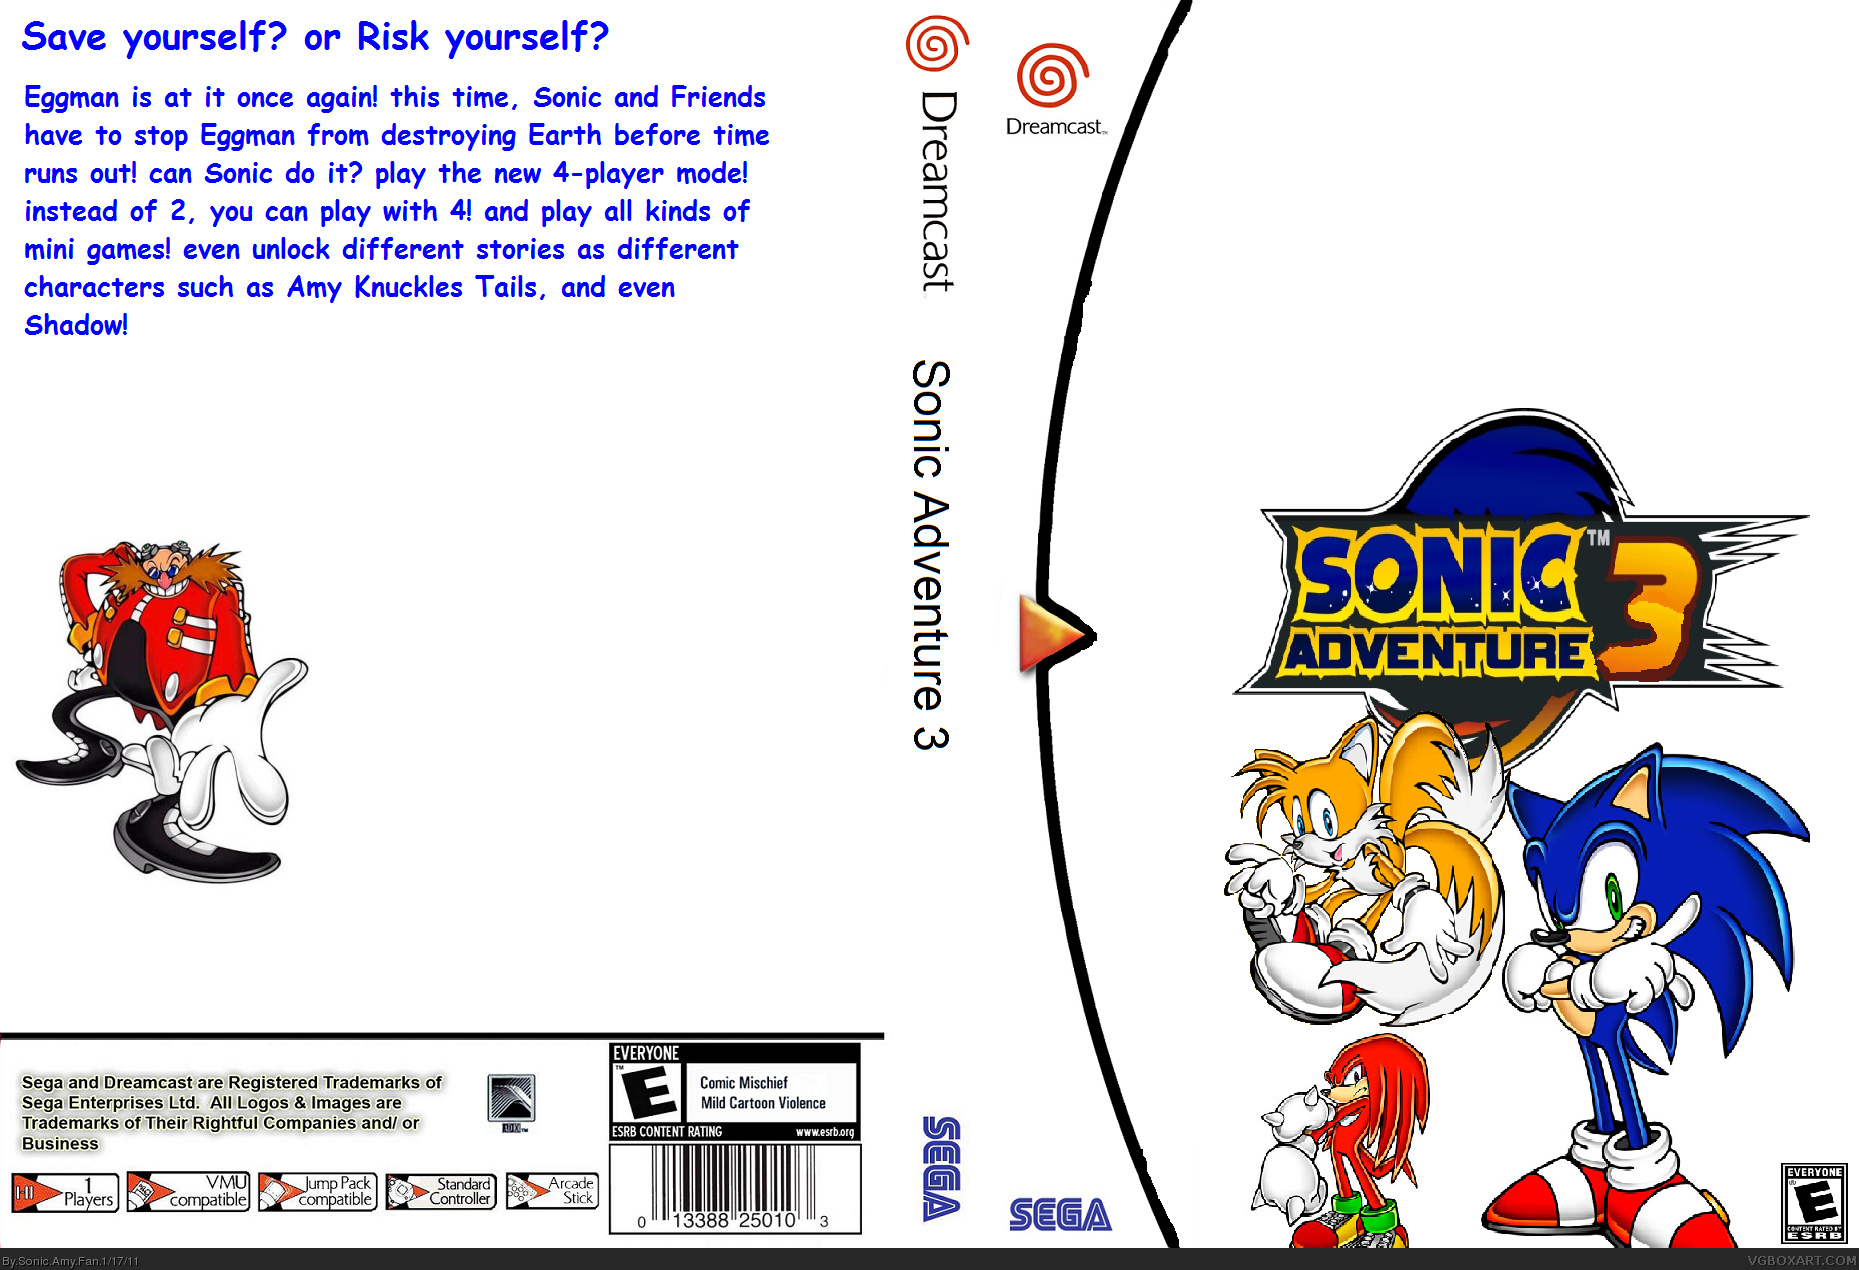 Sonic Adventure Dreamcast Box. Sega Dreamcast Sonic DX. Sonic Adventure Dreamcast Cover Art. Sonic Cover Dreamcast. Sonic на dreamcast русский